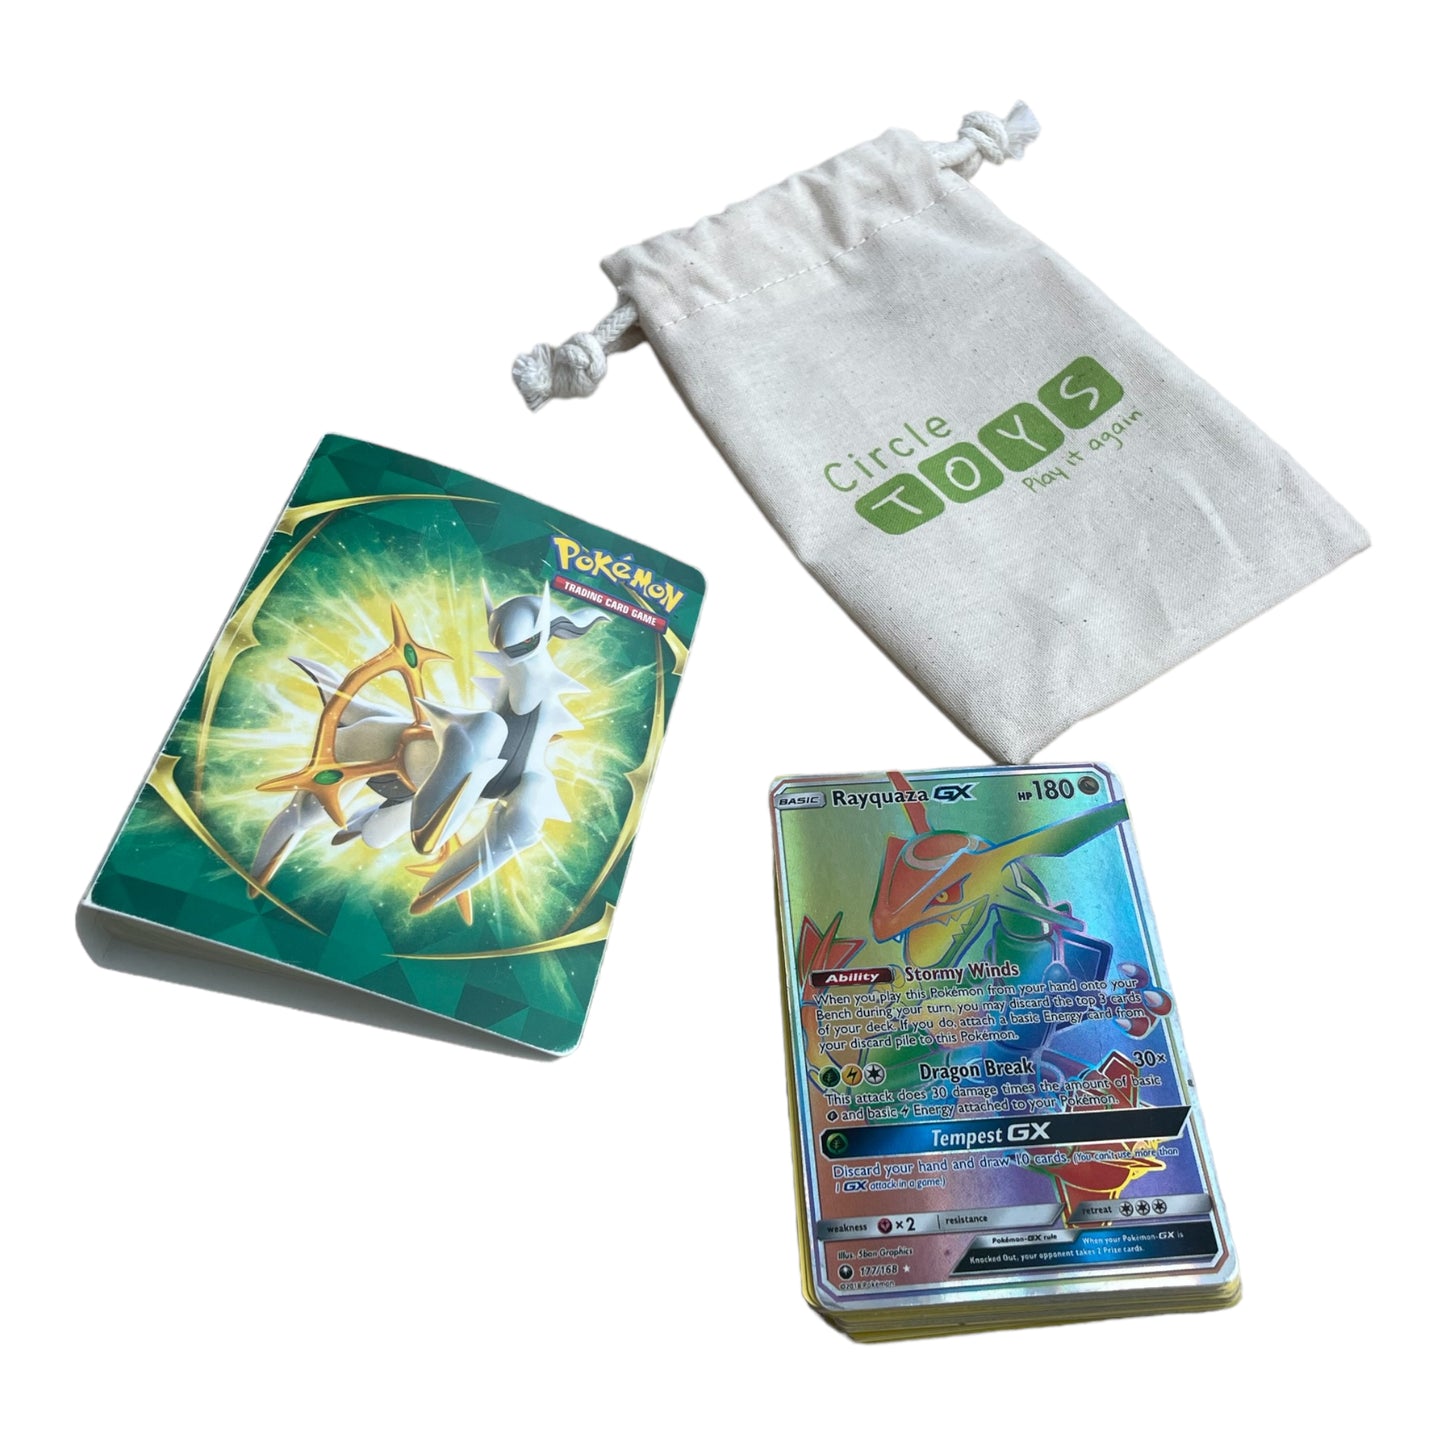 Pokémon Trading card game - Arceus Collector's Mini Binder with 50 pokémon cards